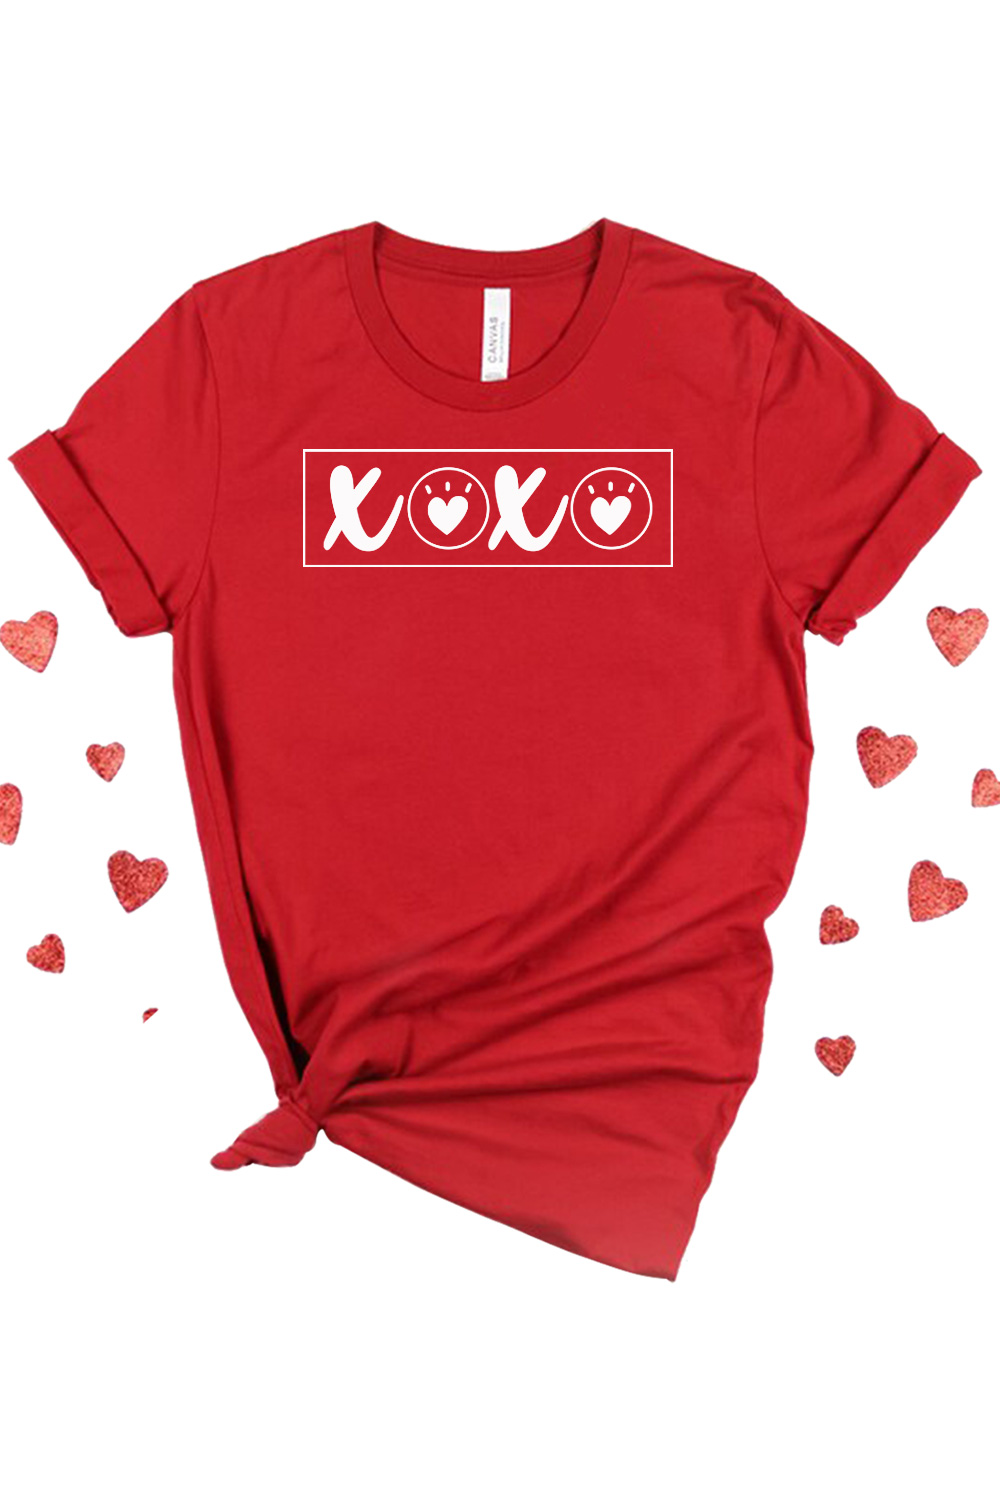 Image of a t-shirt with an irresistible Xoxo slogan